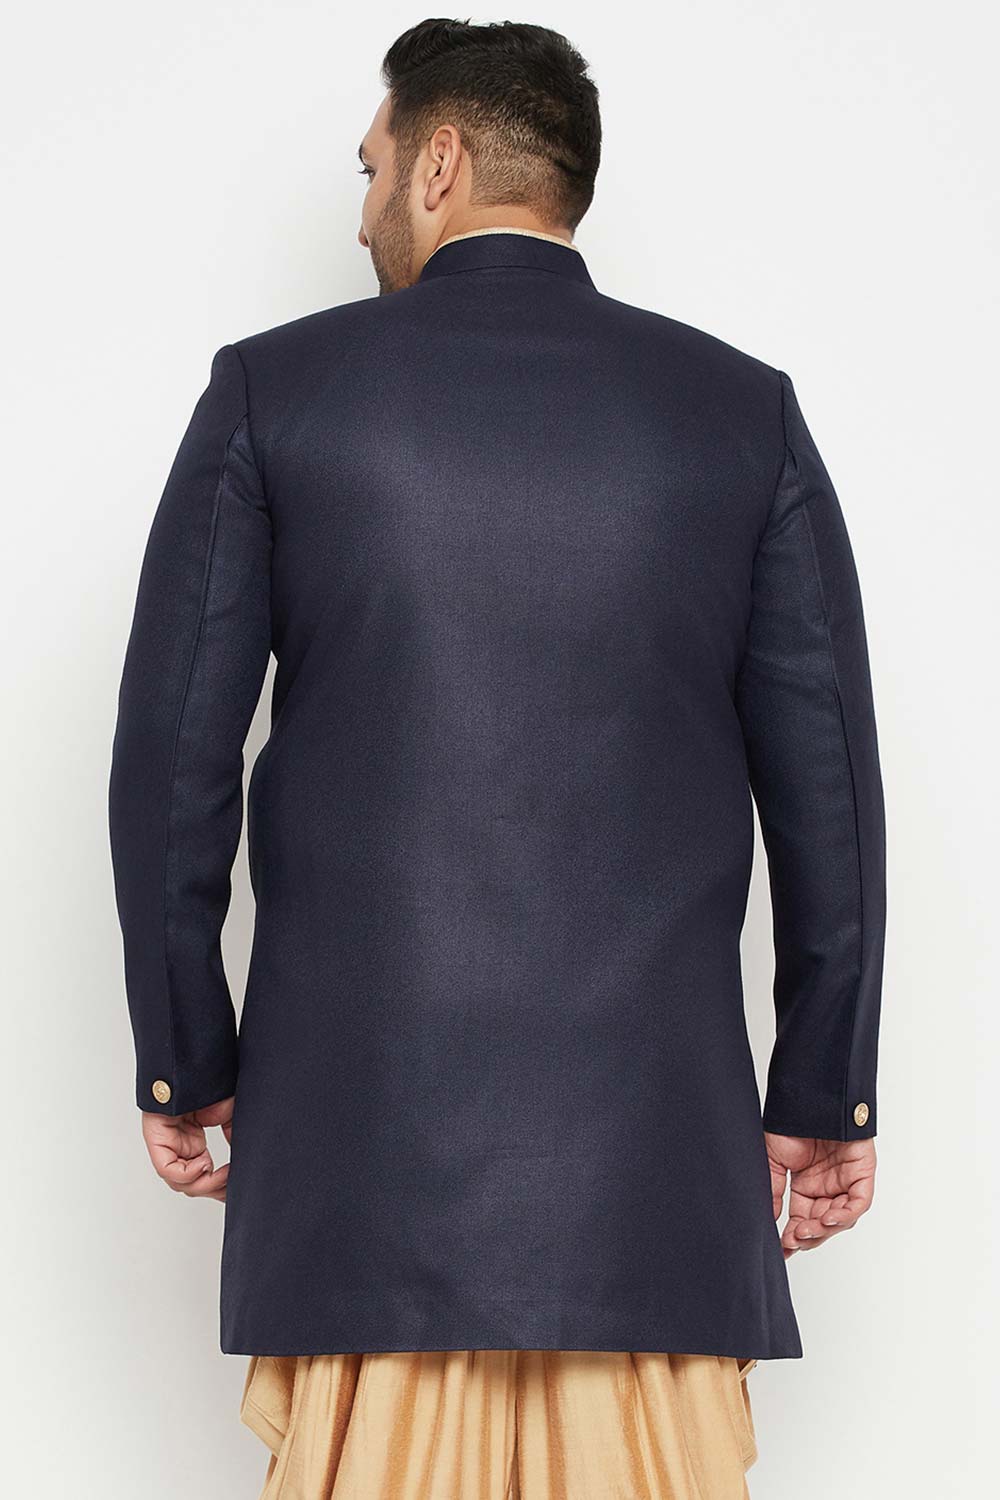 Buy Men's Silk Blend Solid Sherwani Top in Navy Blue - Back